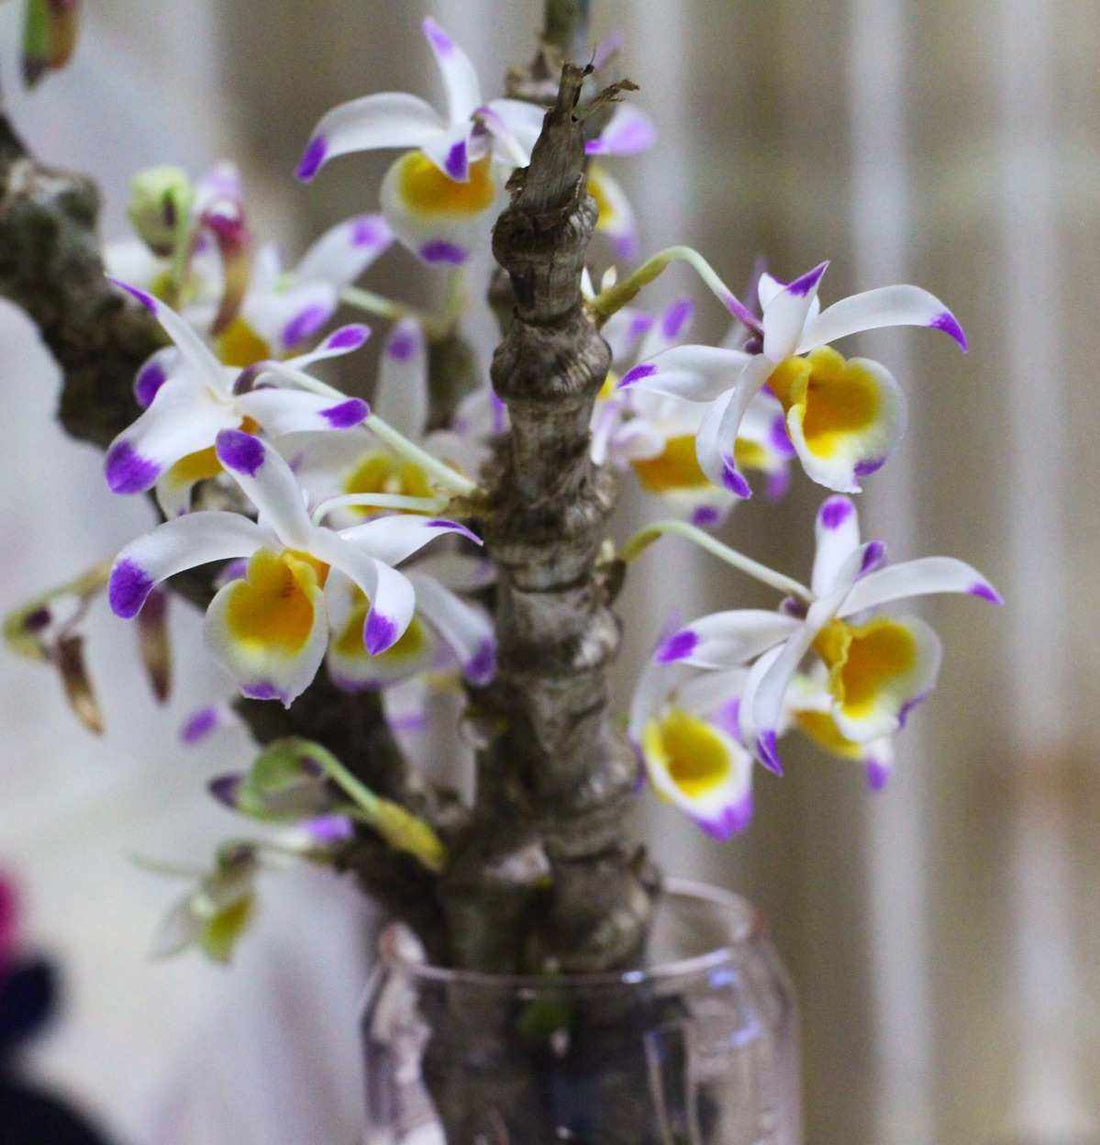 The accordion-like orchid Dendrobium pendulum